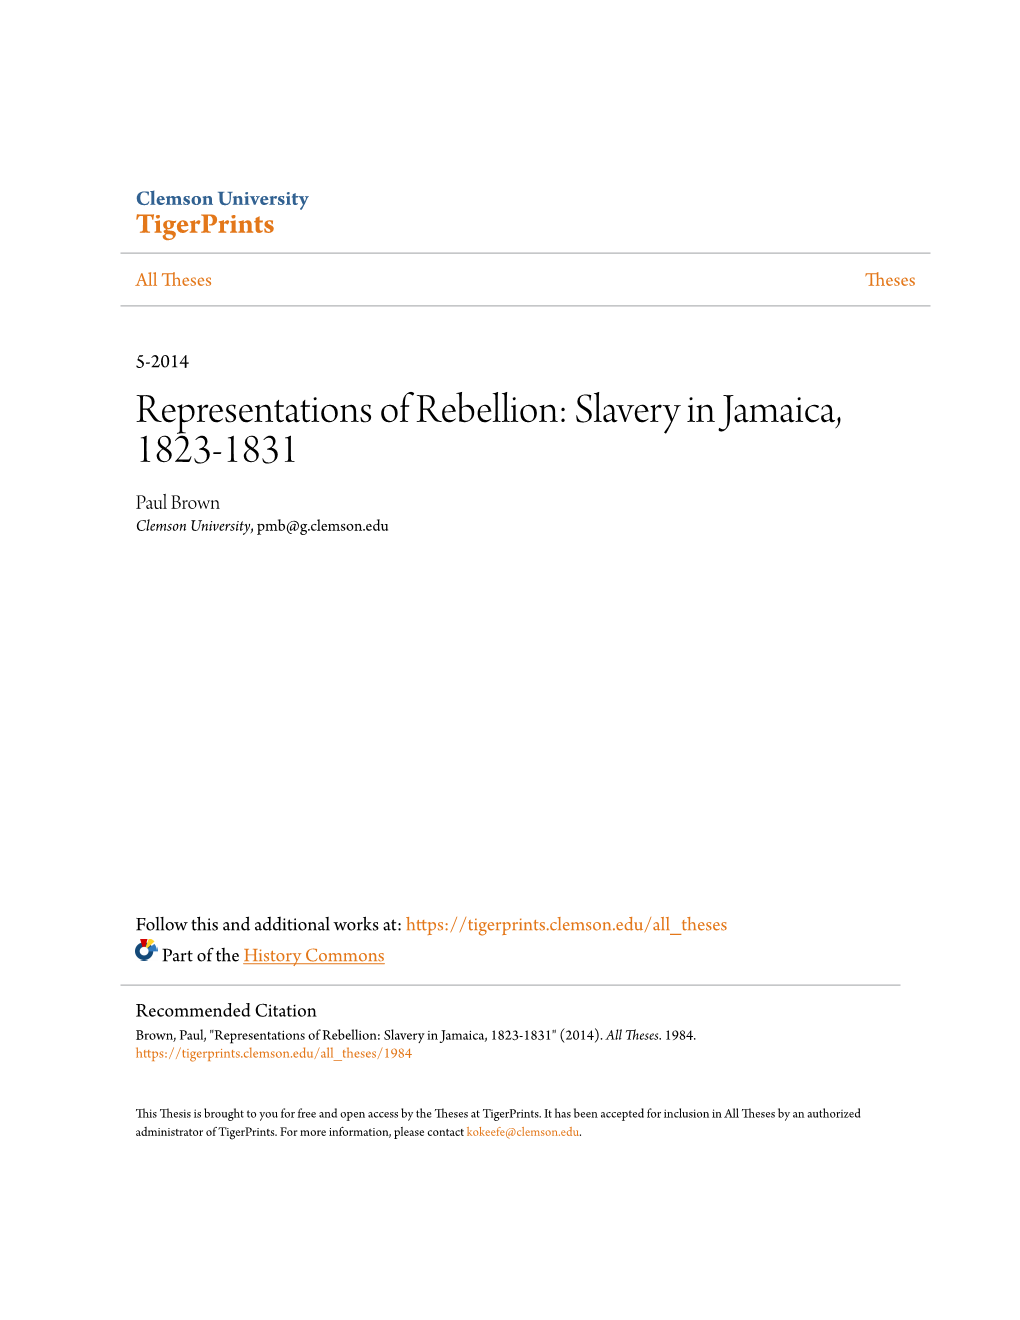 Representations of Rebellion: Slavery in Jamaica, 1823-1831 Paul Brown Clemson University, Pmb@G.Clemson.Edu